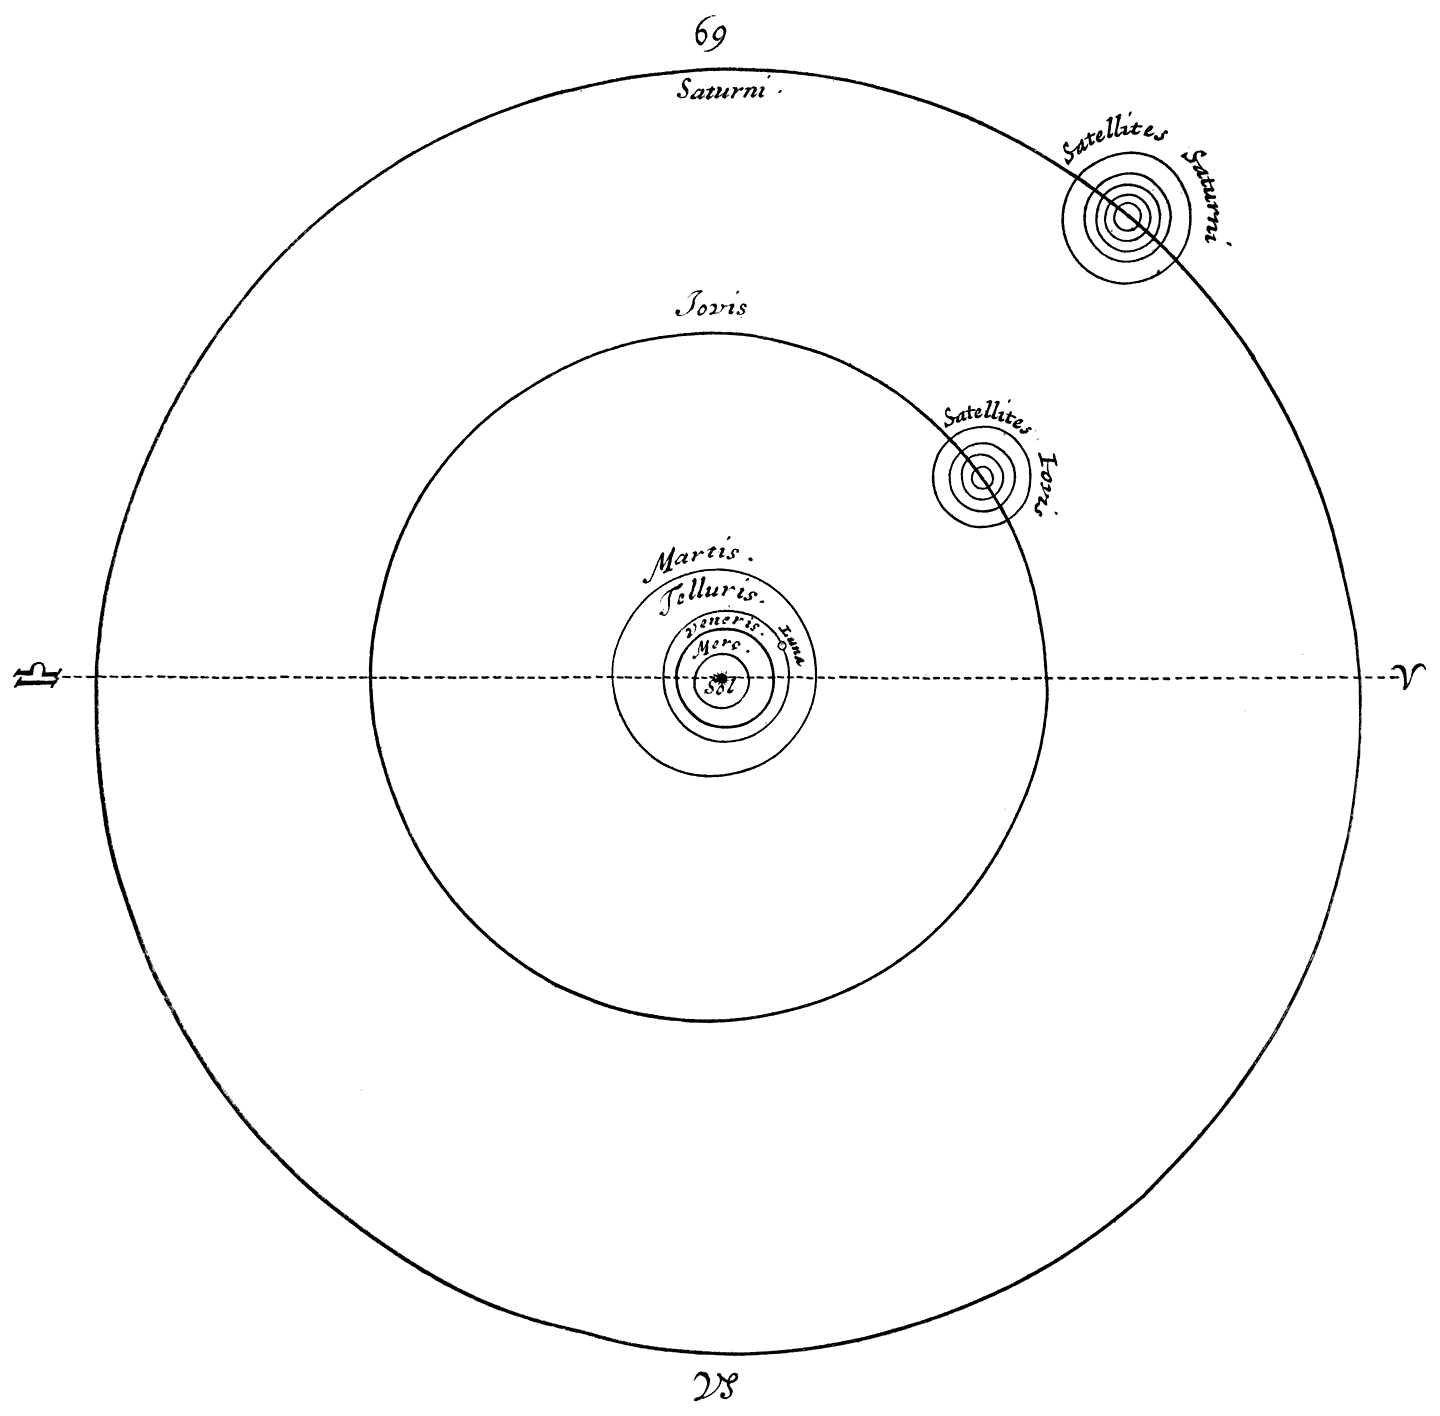 Fig. 1 SYSTEMA COPERNICI.